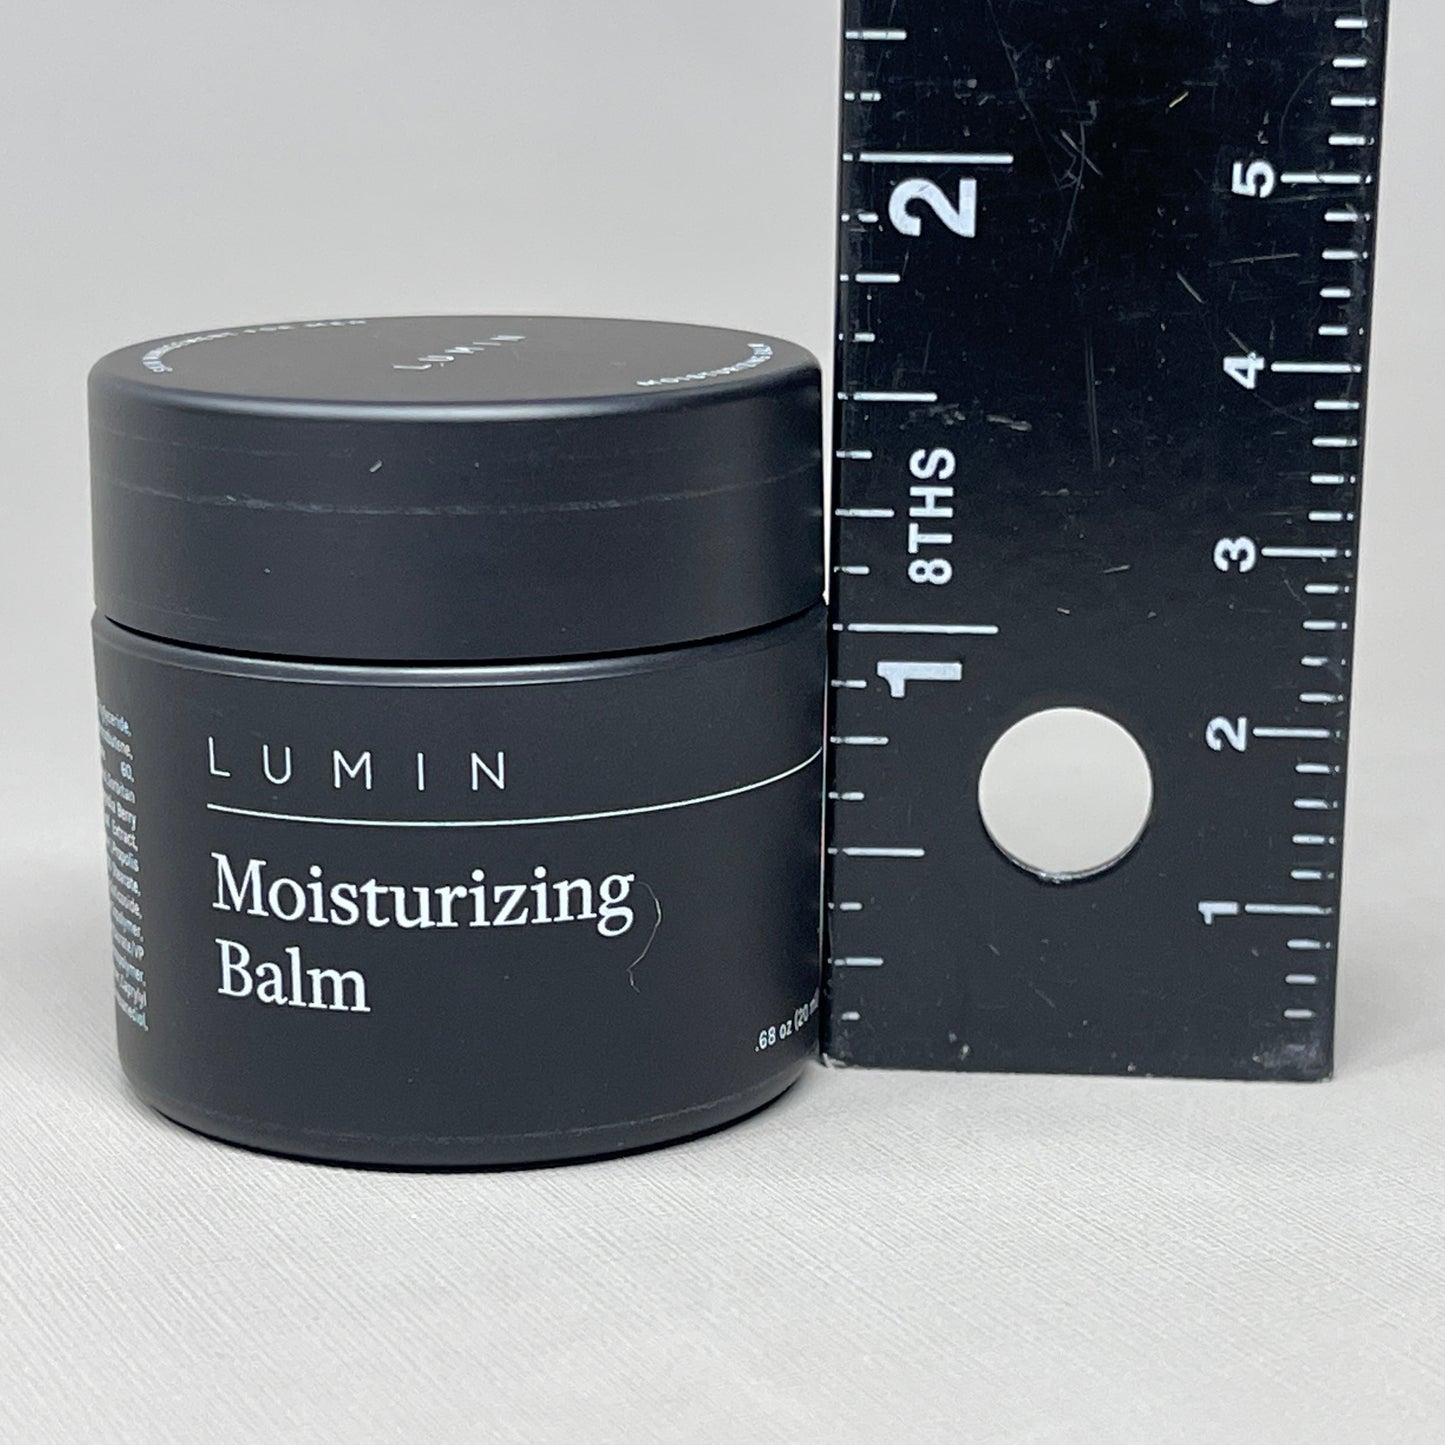 LUMIN (3-PACK) Men's Moisturizing Balm Ultra-Hydrating 0.68 oz 20ml